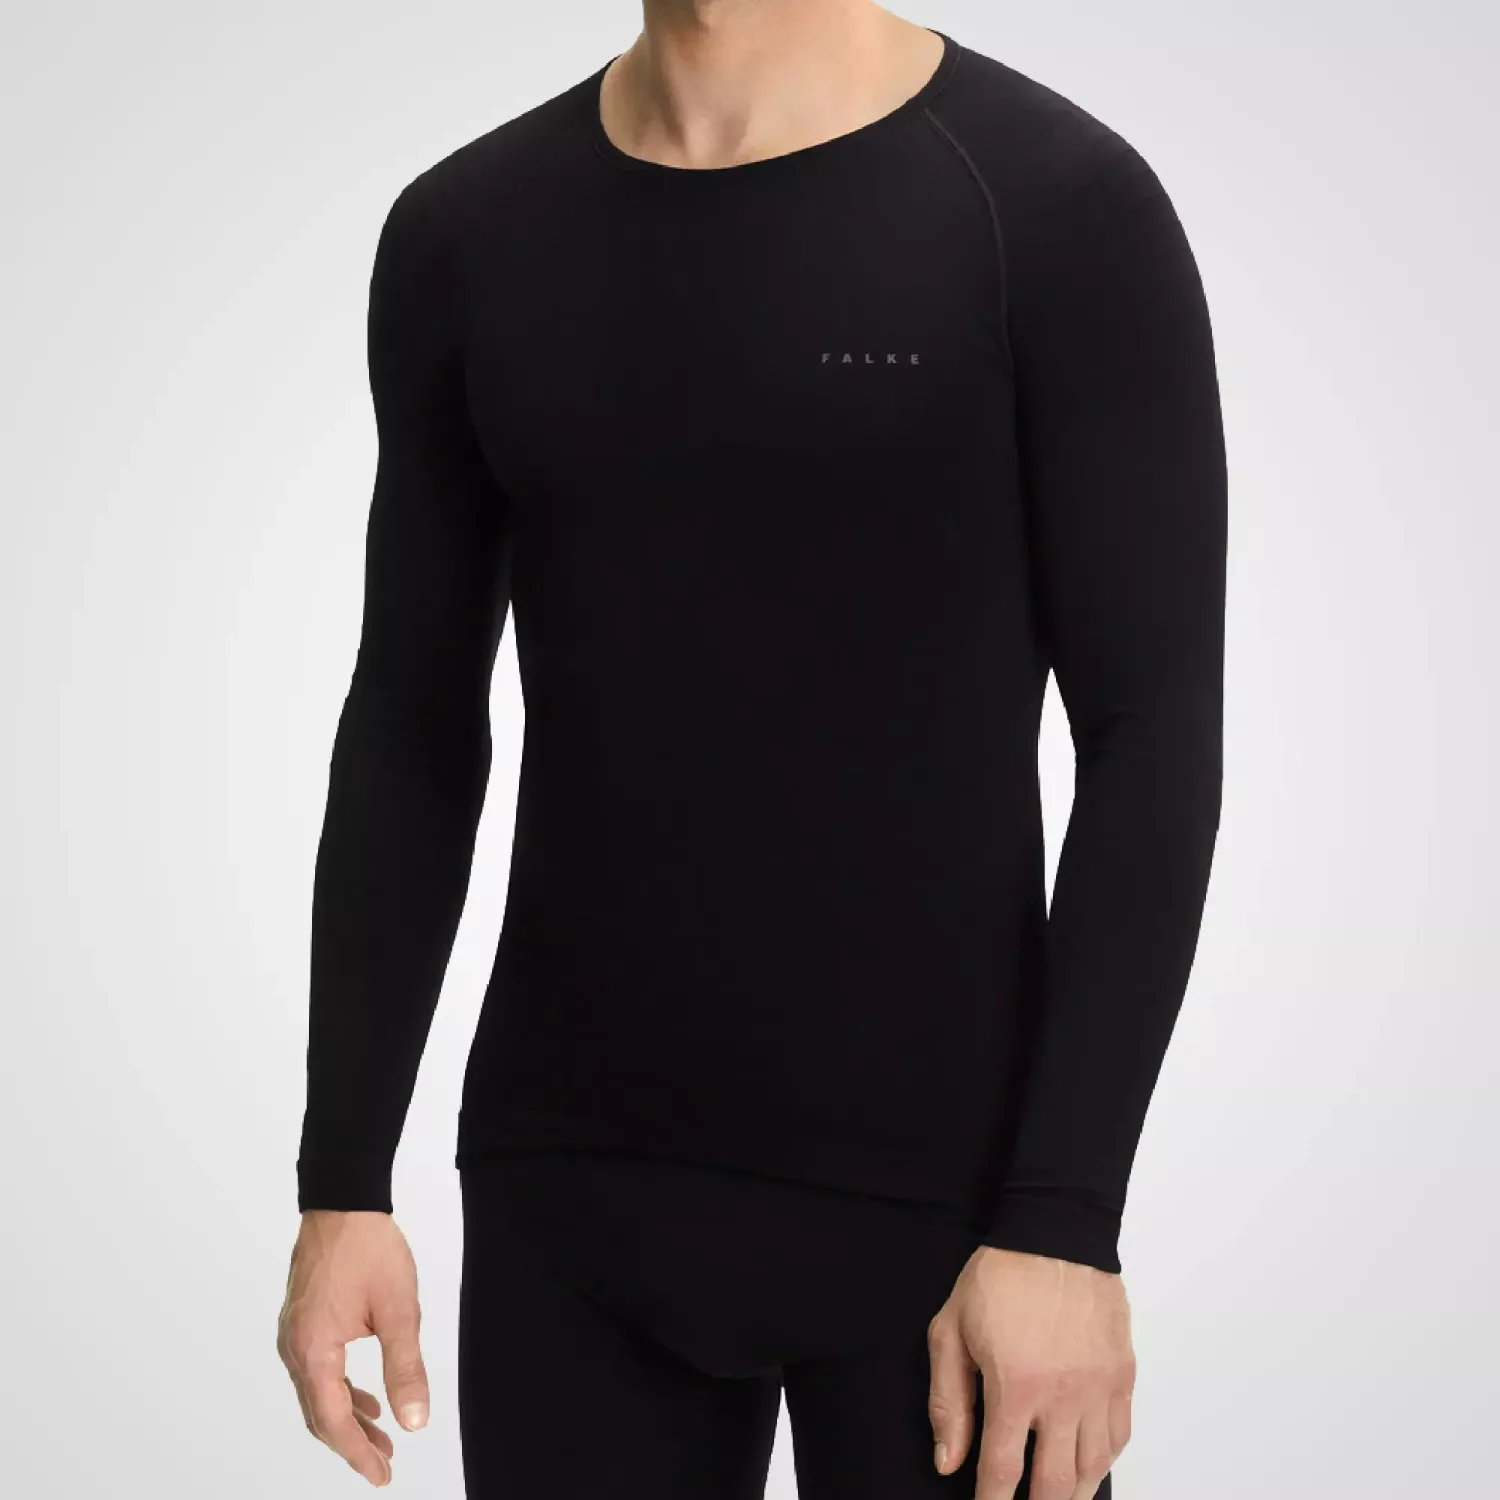 Falke - Warm Longsleeved Shirt Tight Men - Black S